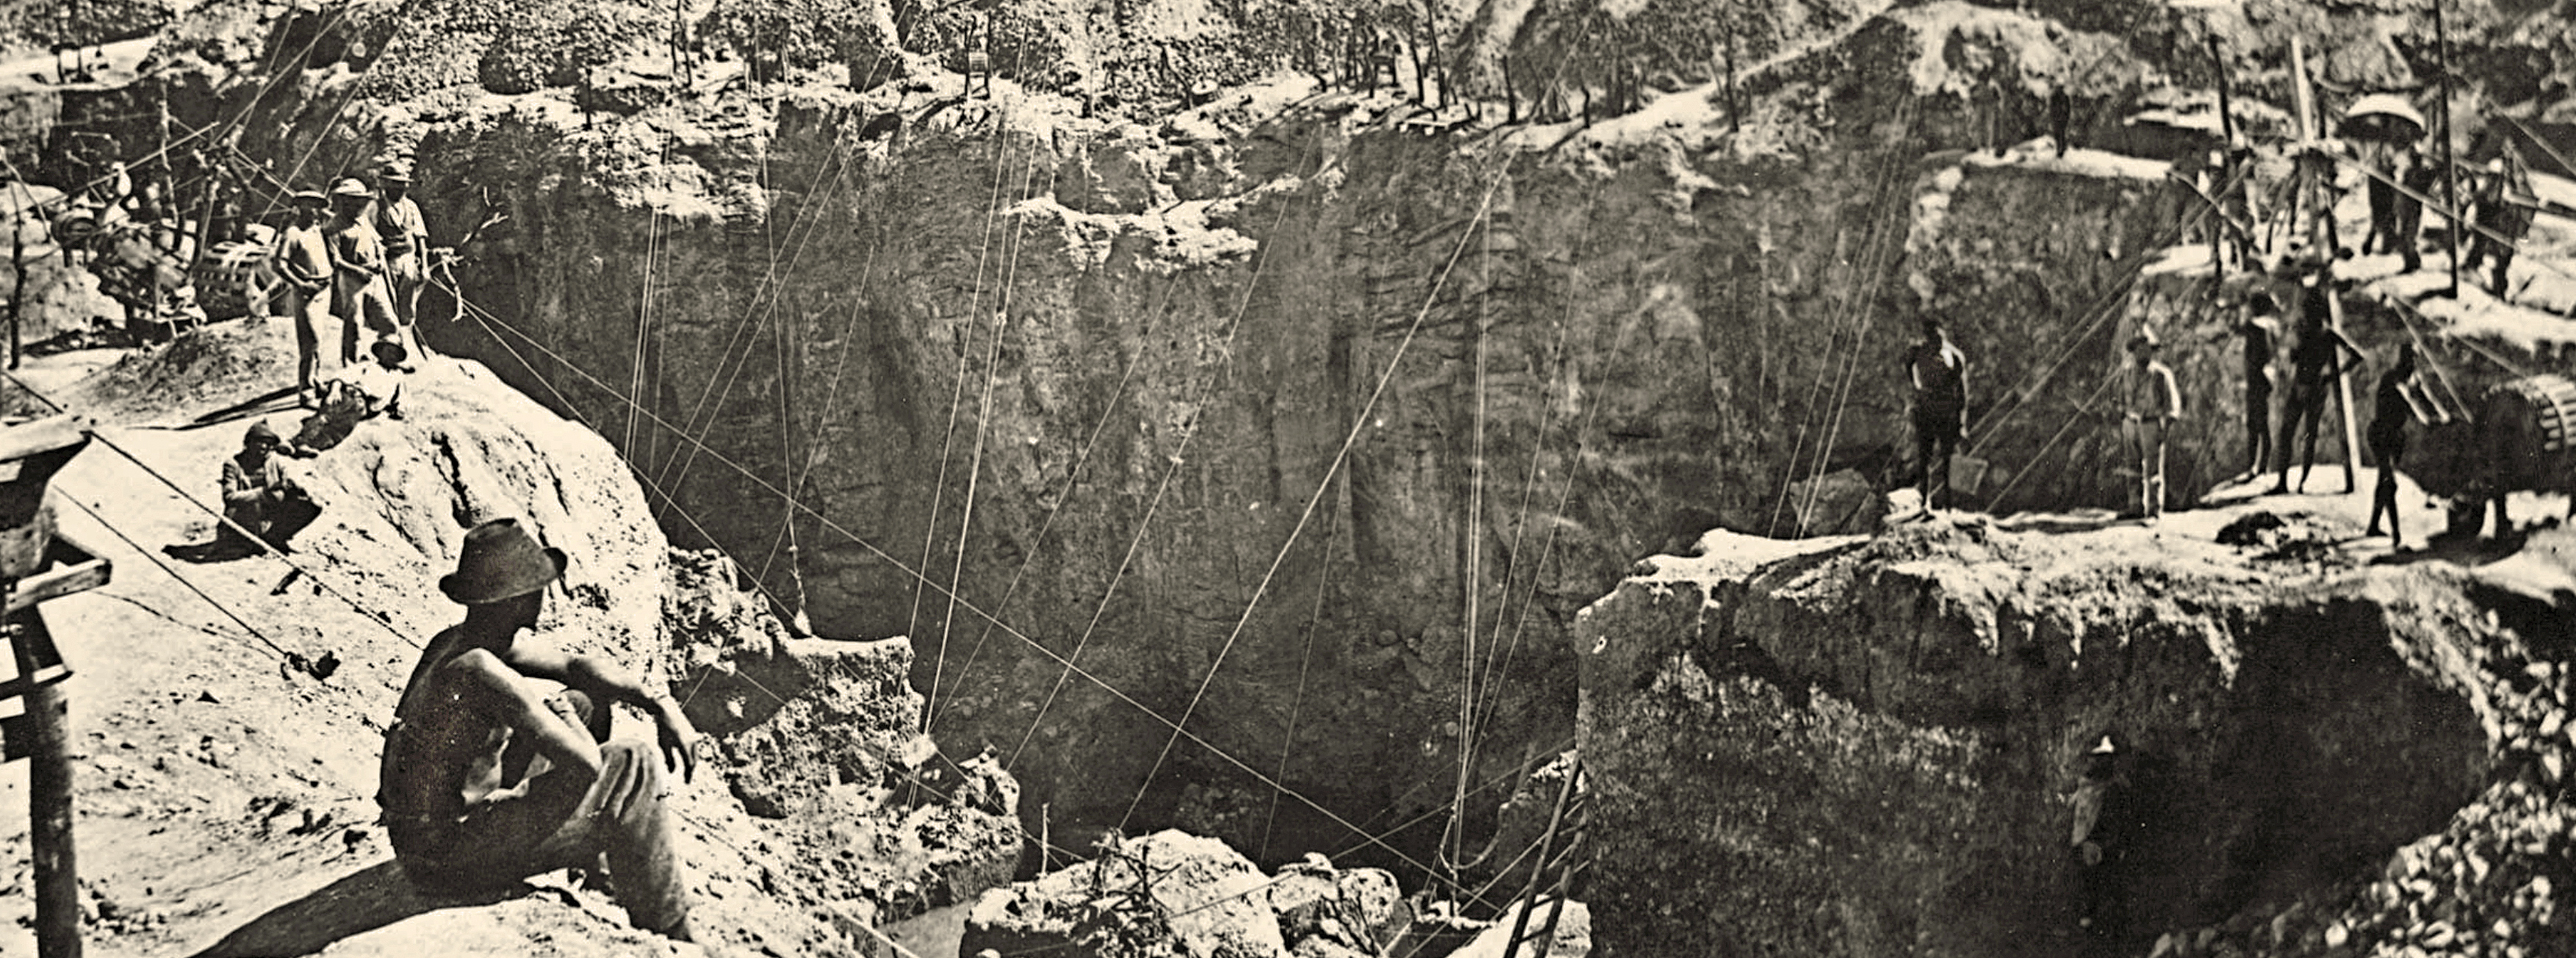 Photograph of the Kimberley diamond mine, 1872